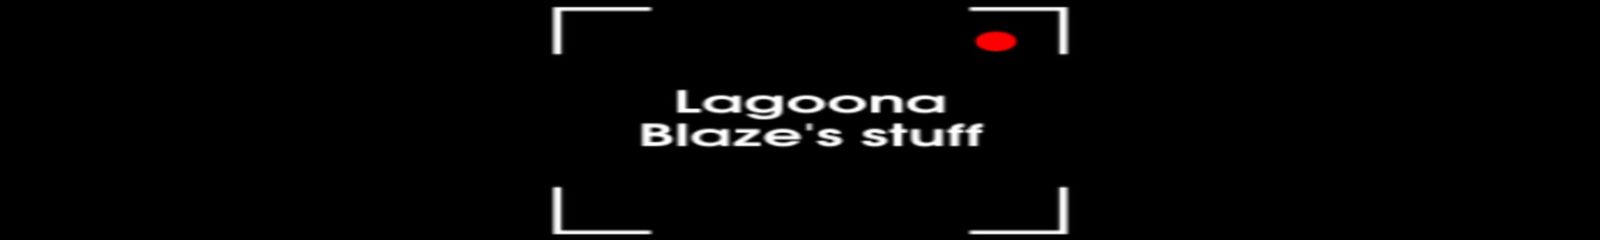 Lagoona Blaze's Stuff